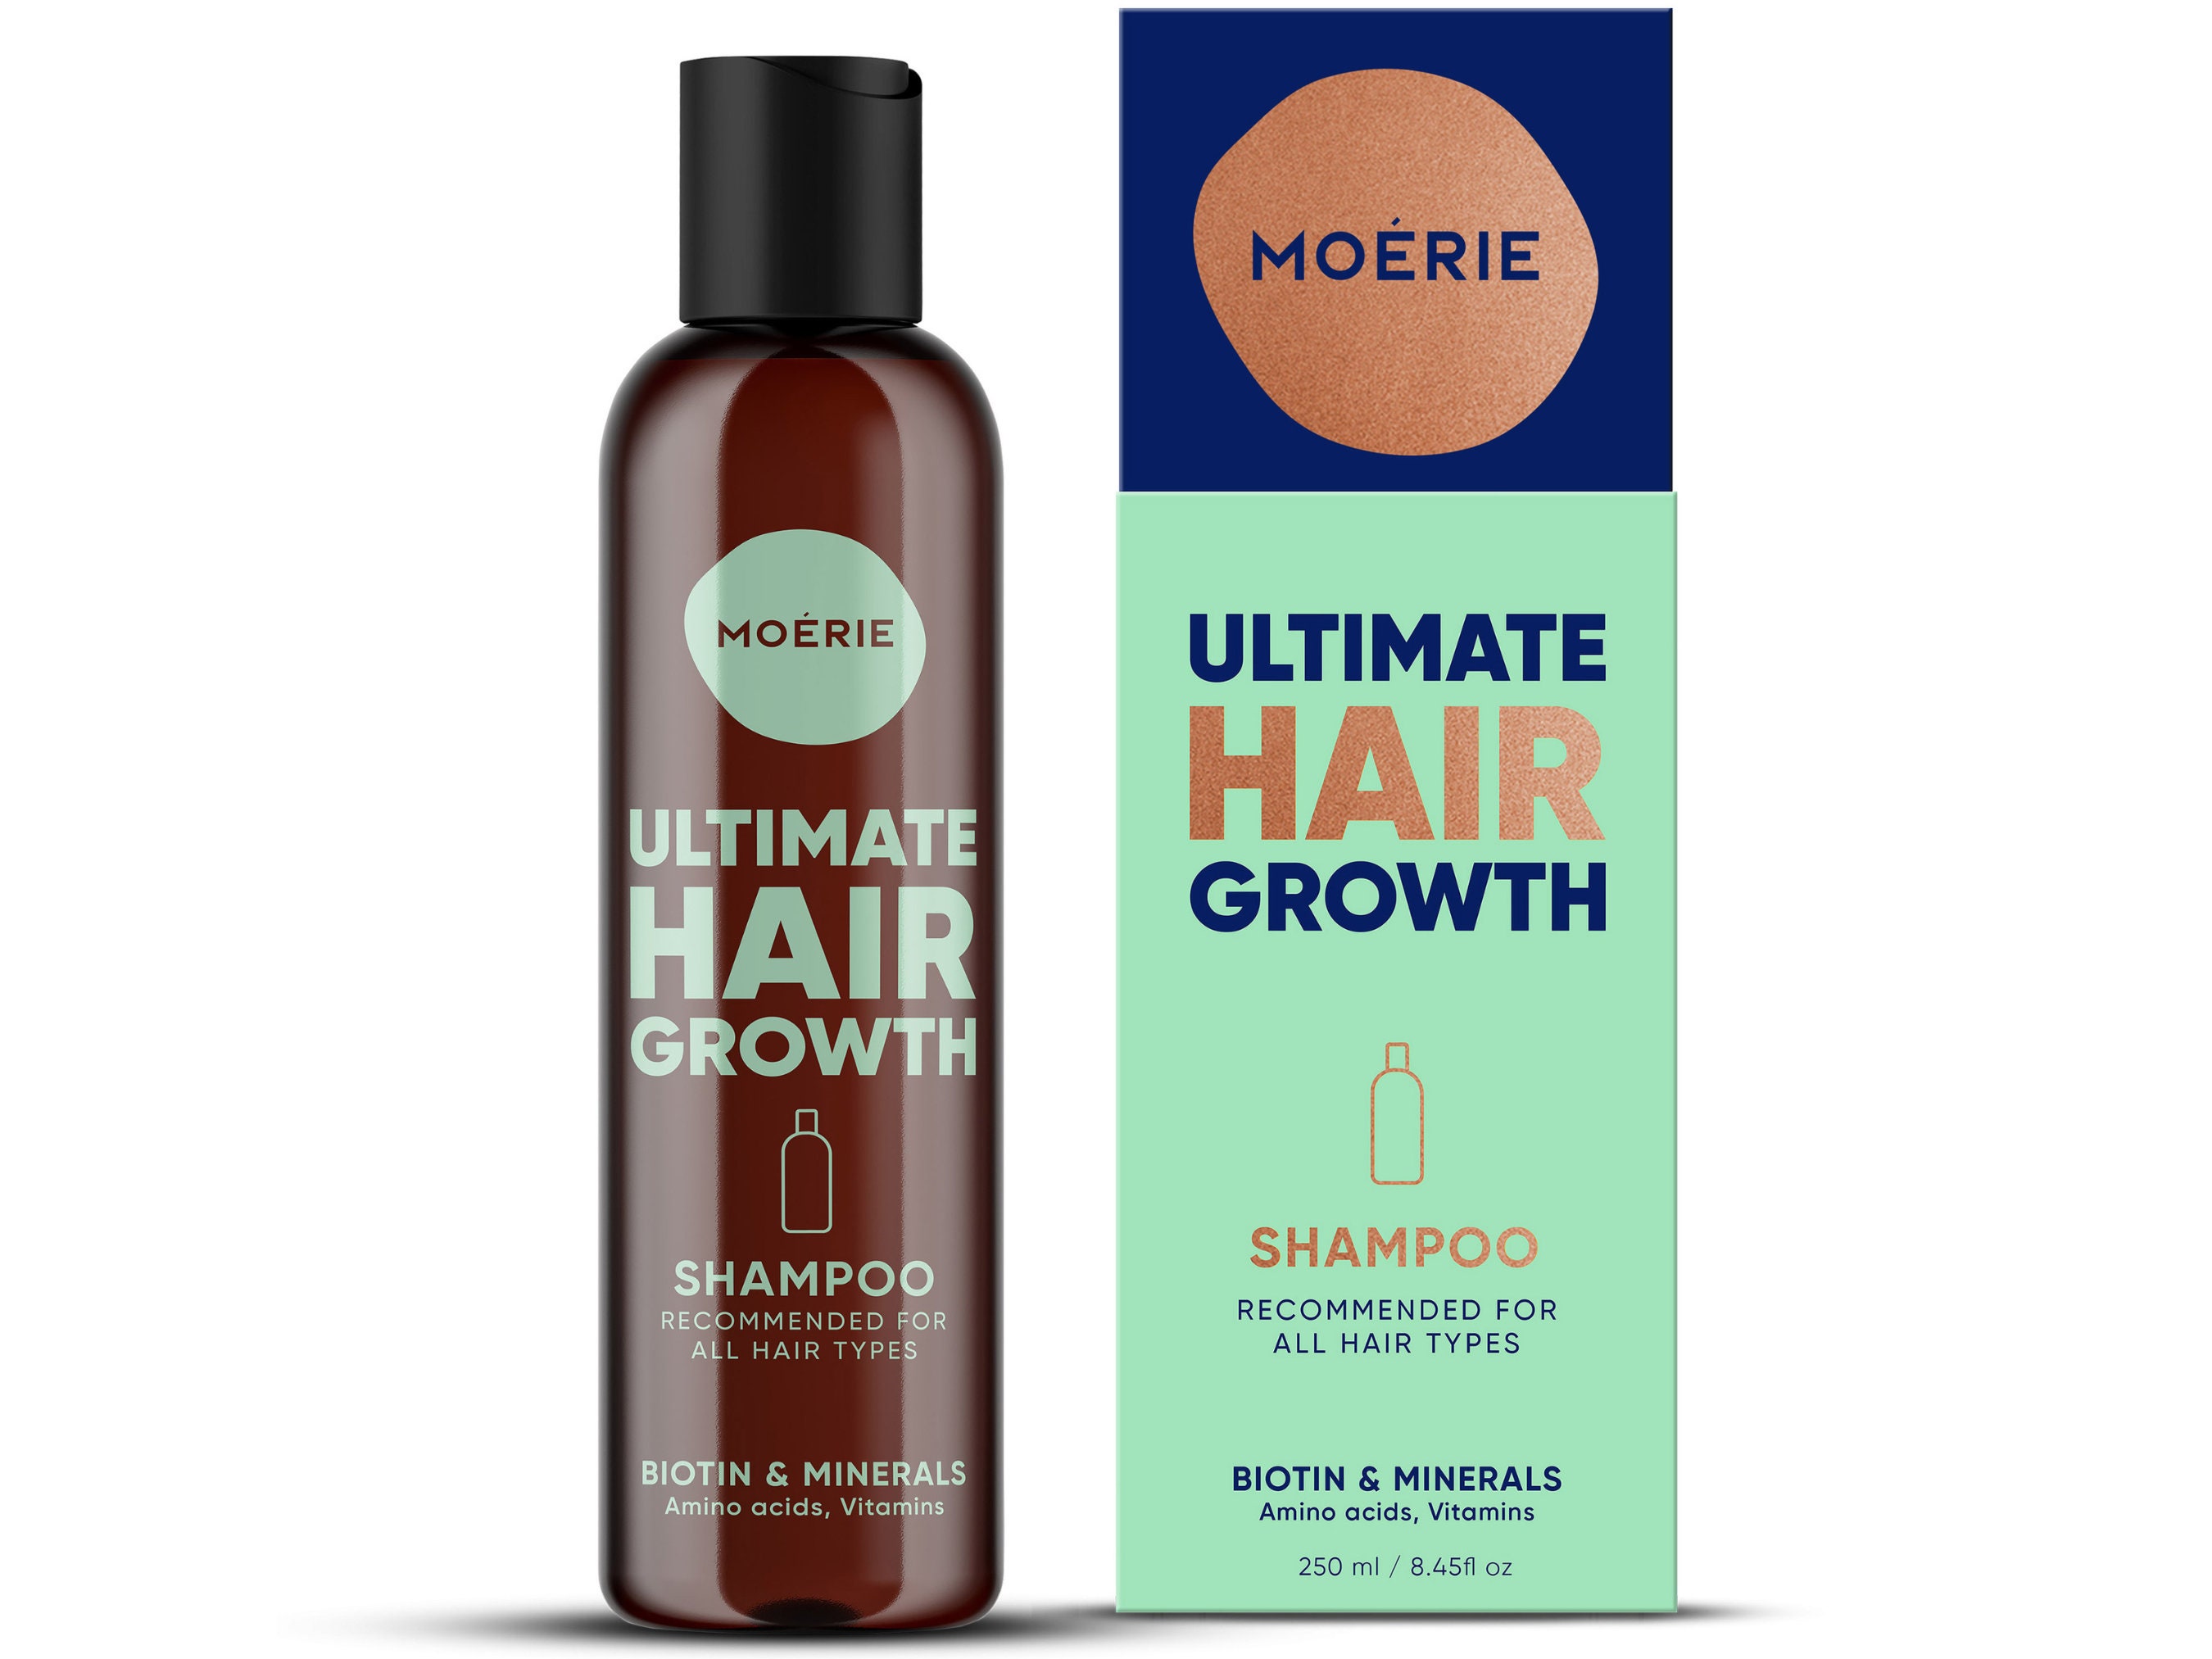 Growth Shampoo 77 Minerals 5 Vitamins for Natural Hair -